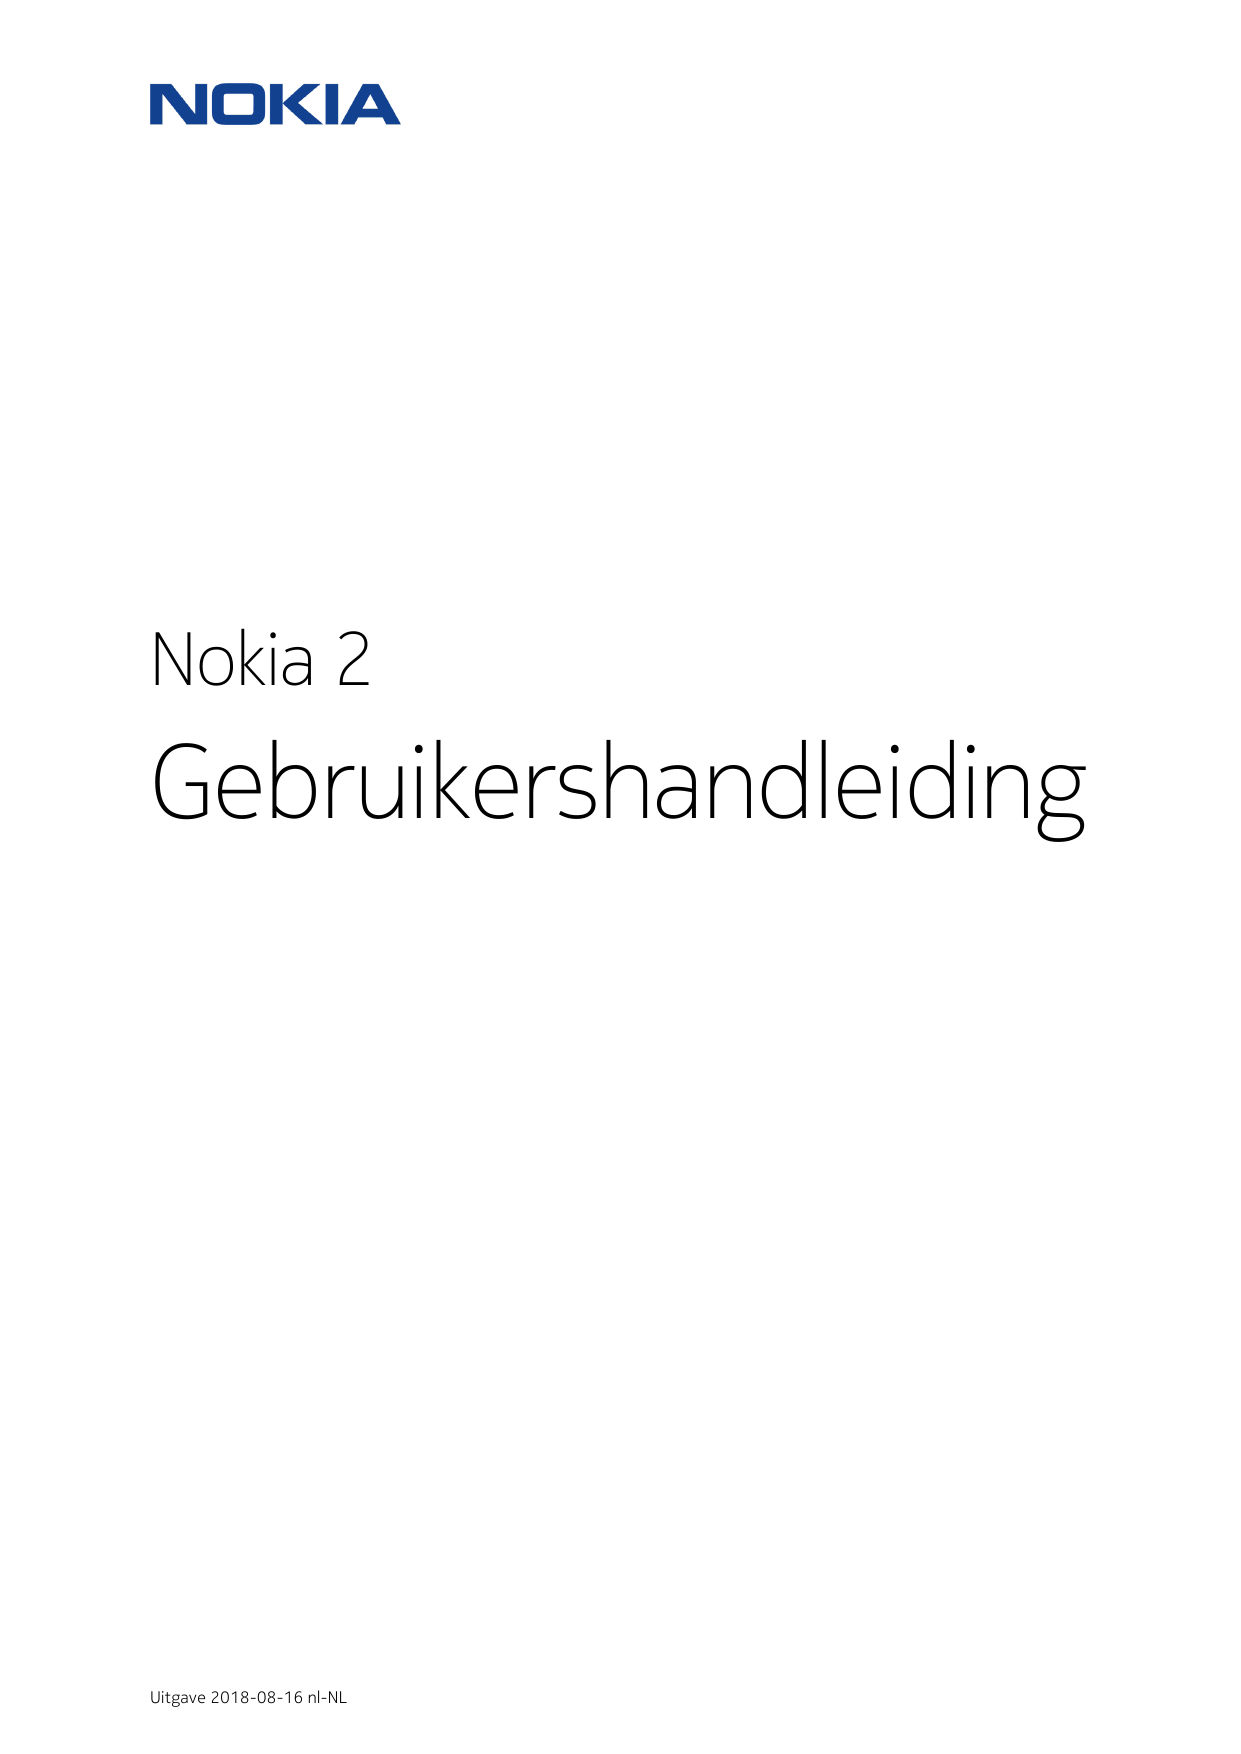 Nokia 2GebruikershandleidingUitgave 2018-08-16 nl-NL